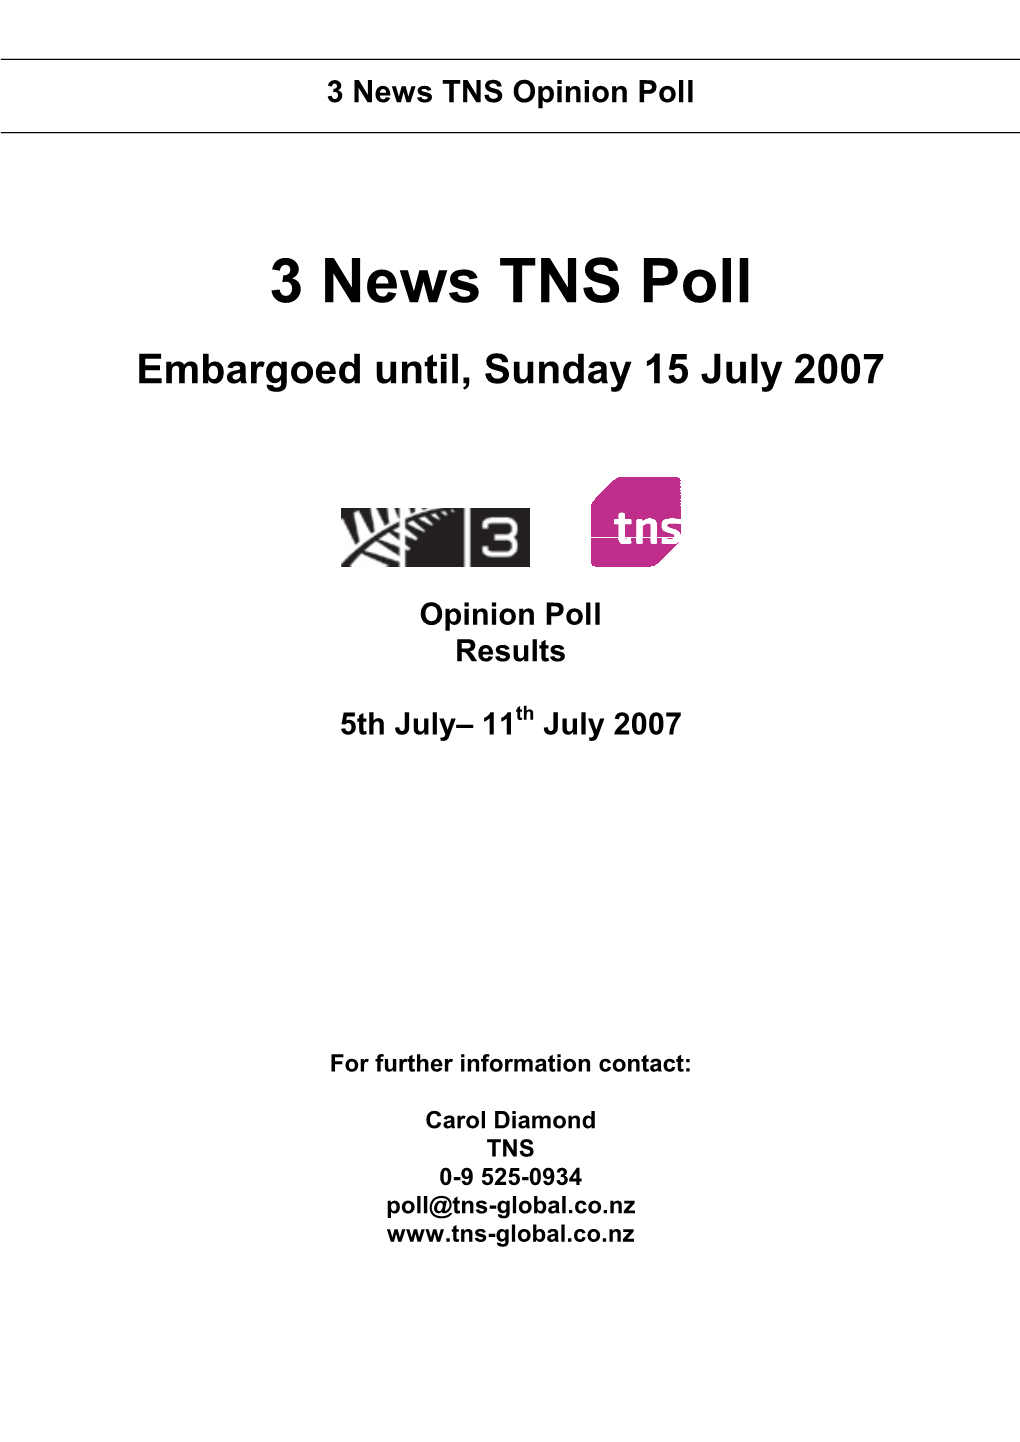 3 News TNS Poll Embargoed Until, Sunday 15 July 2007